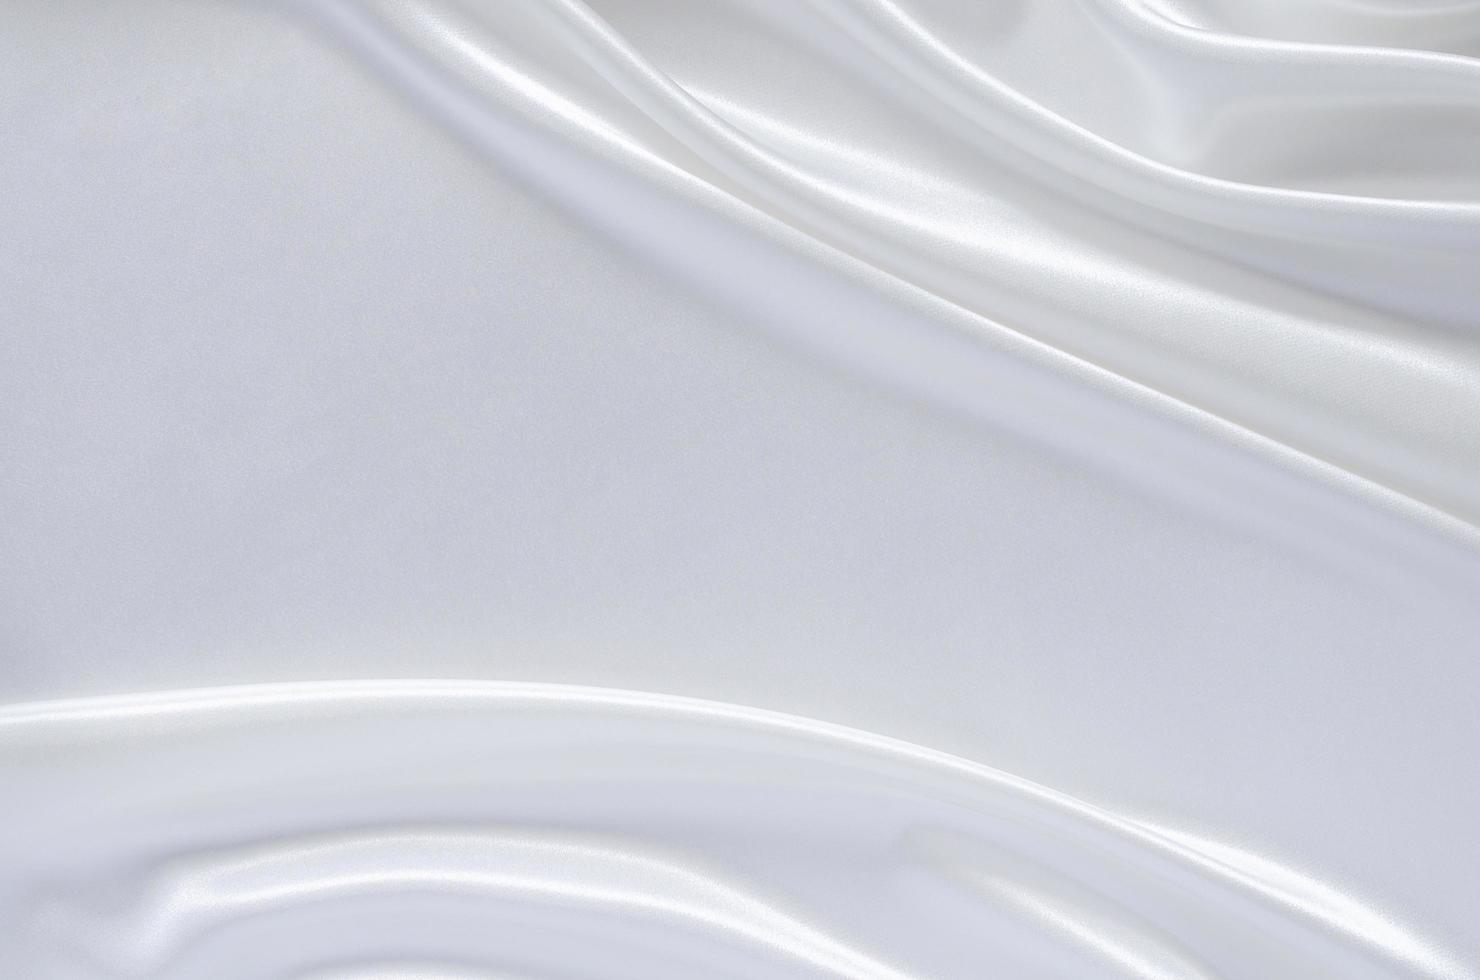 Elegant wavy and smooth white satin cloth texture background. photo